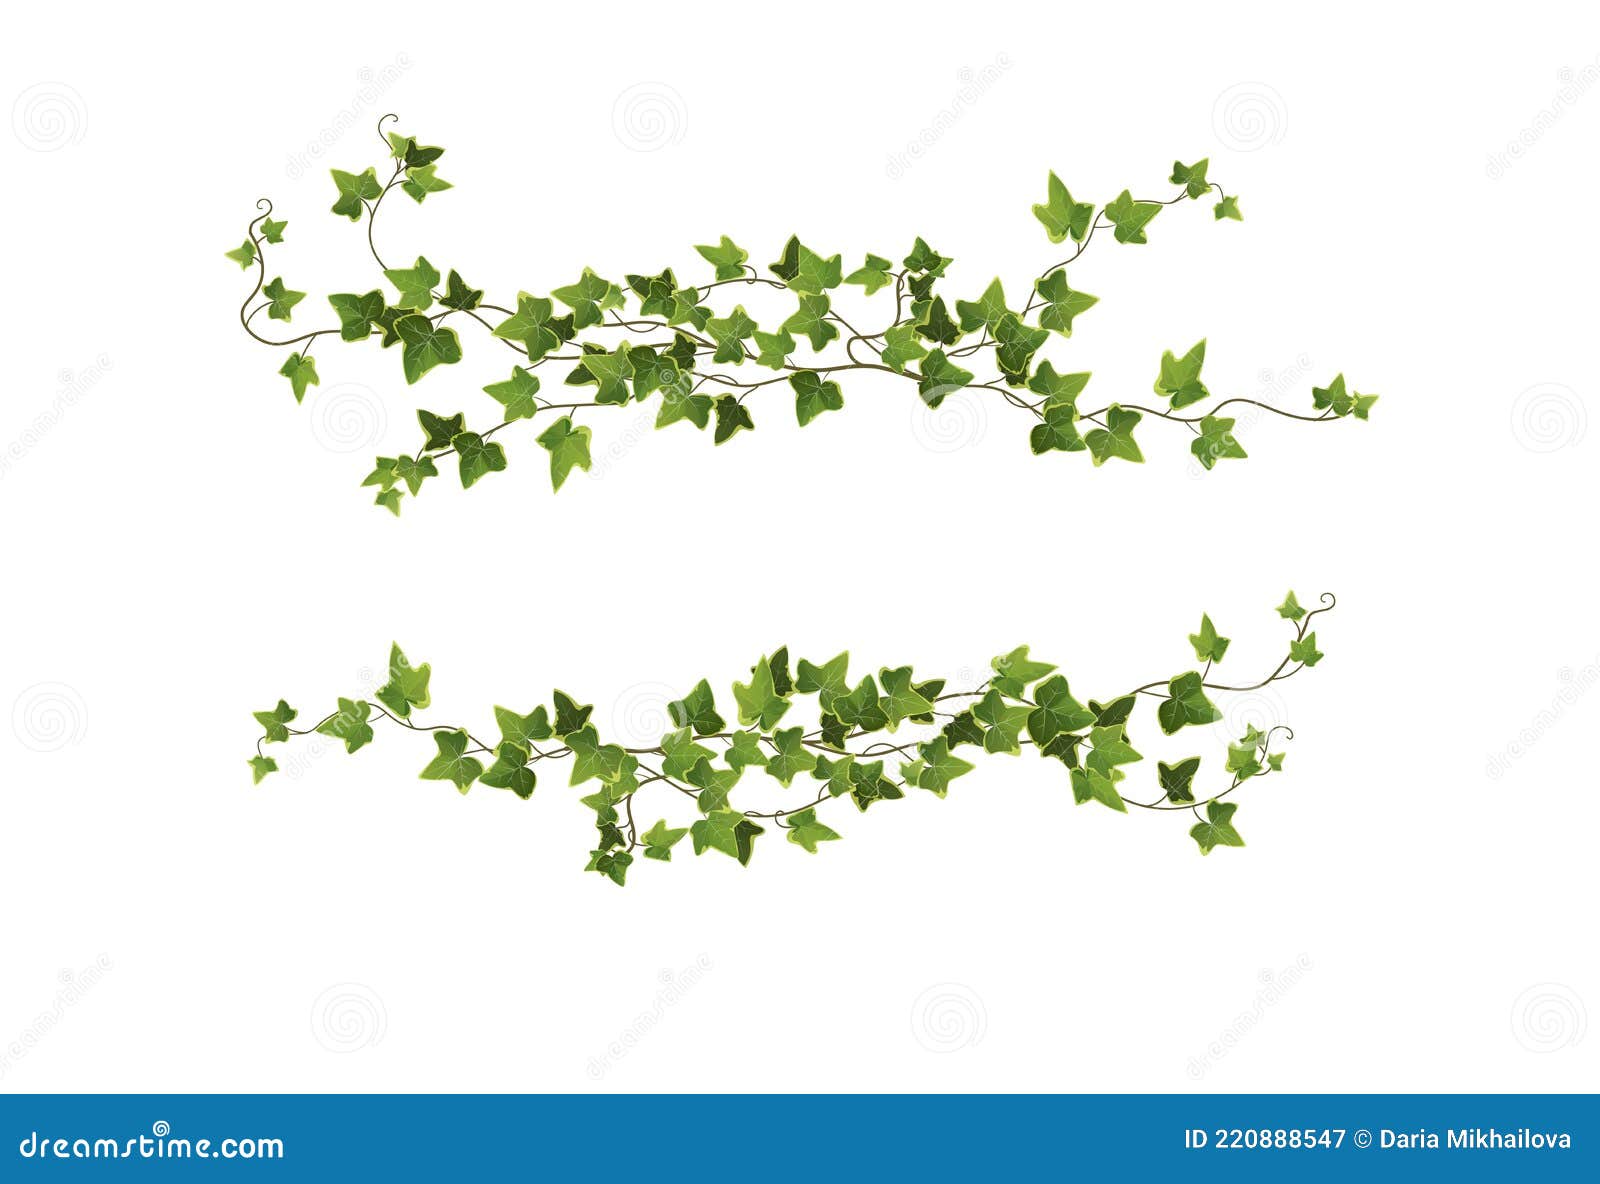 Ivy Plant Branch Cartoon Vector Illustration. Limbing Vine. Stock ...